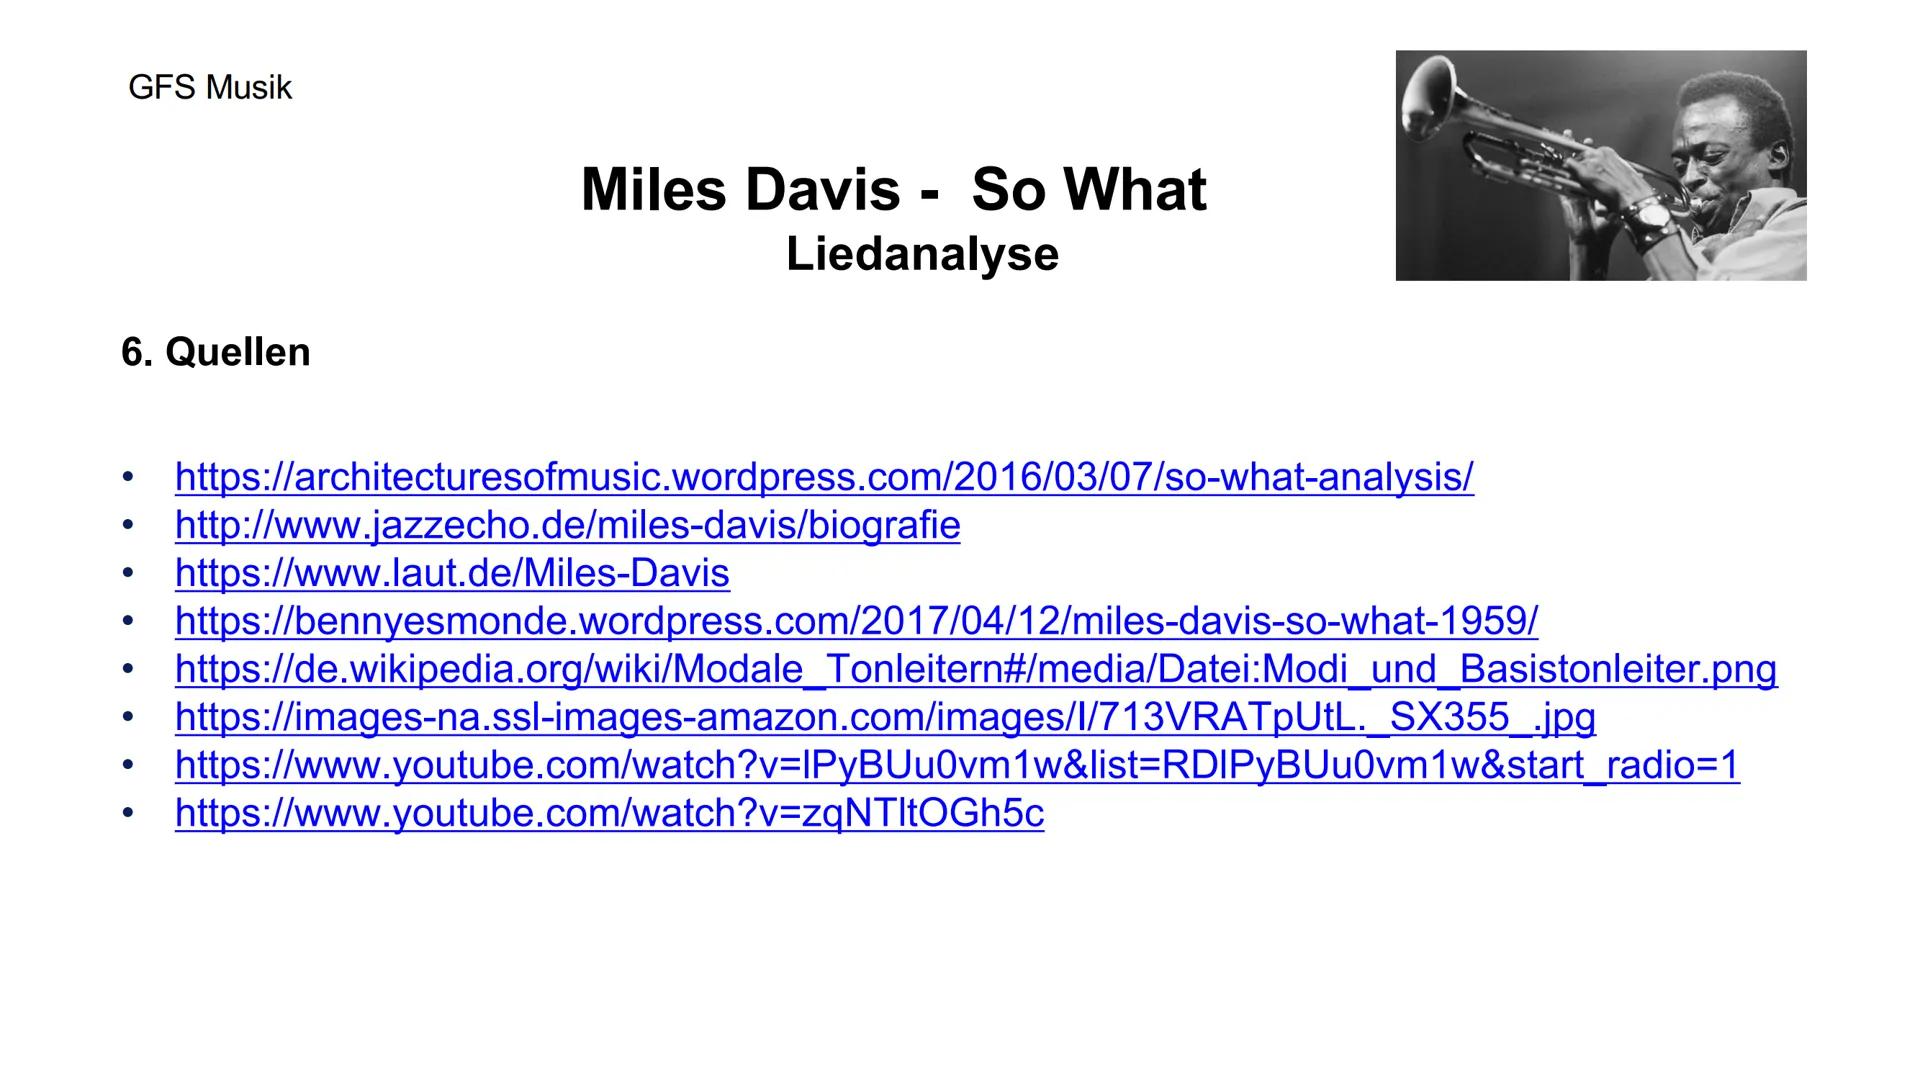 Miles Davis - So what
SO WHAT?
MILES DAVIS
GFS Musik
ORIGINAL MASTER RECORDING
MILES DAVIS Kind of Blue
with Julian "Cannonball Adderley
Pau